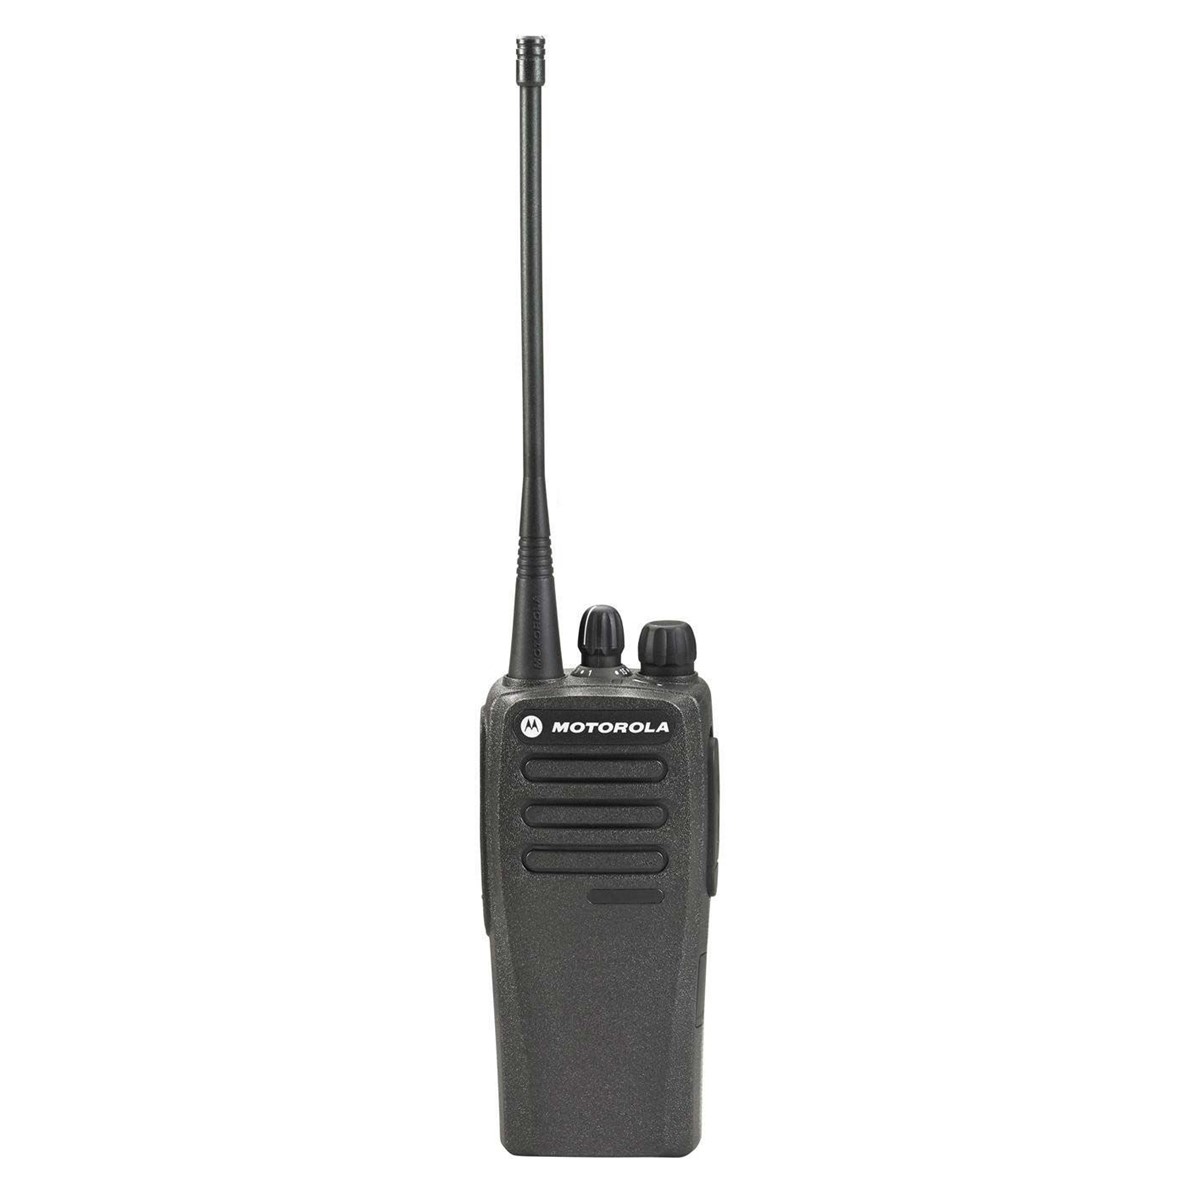 Radio Motorola DEP450 Analógico LAH01QDC9JC2AN UHF 403-470 MHz